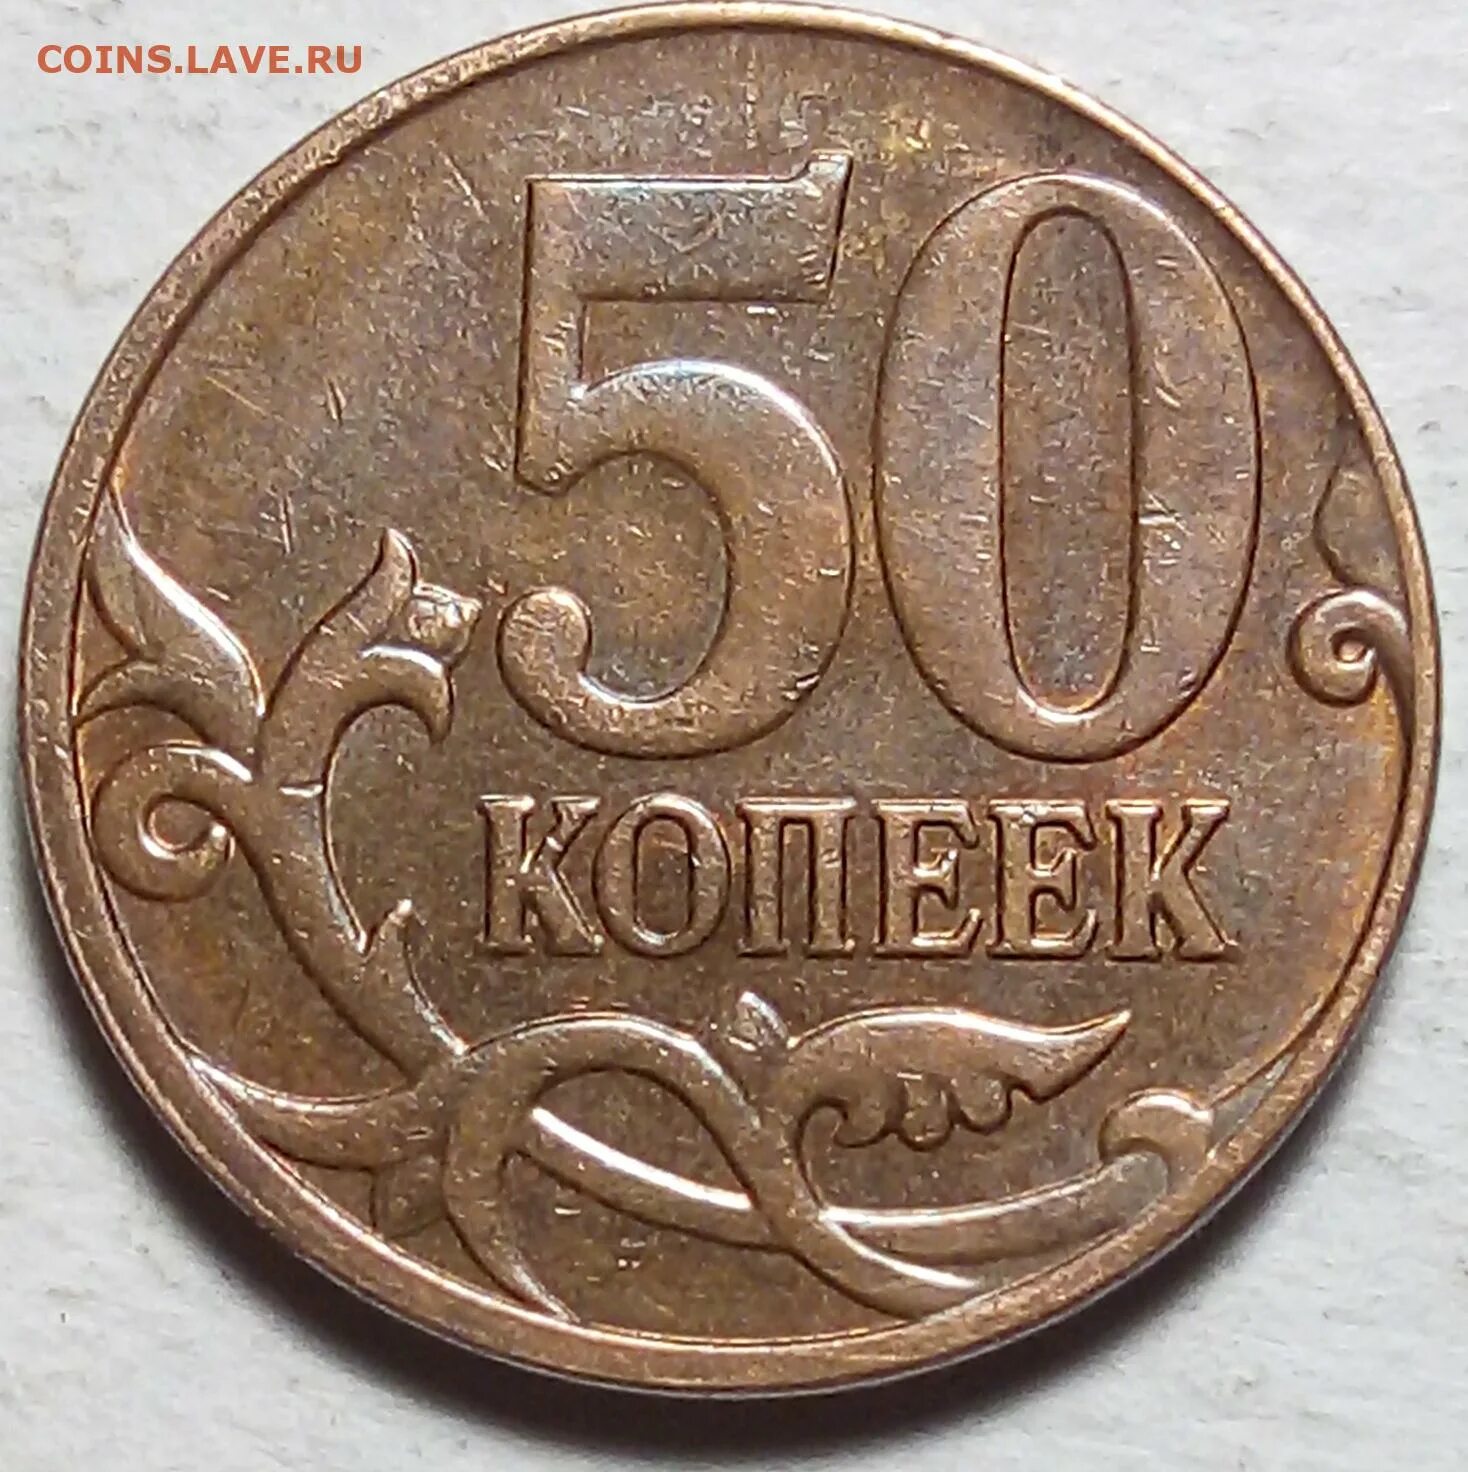 53 рубля 50 копеек. 50 Копеек 1998 м. 10 Коп 2012г СПМД. 50 Коп 2013г. 1 К 50.